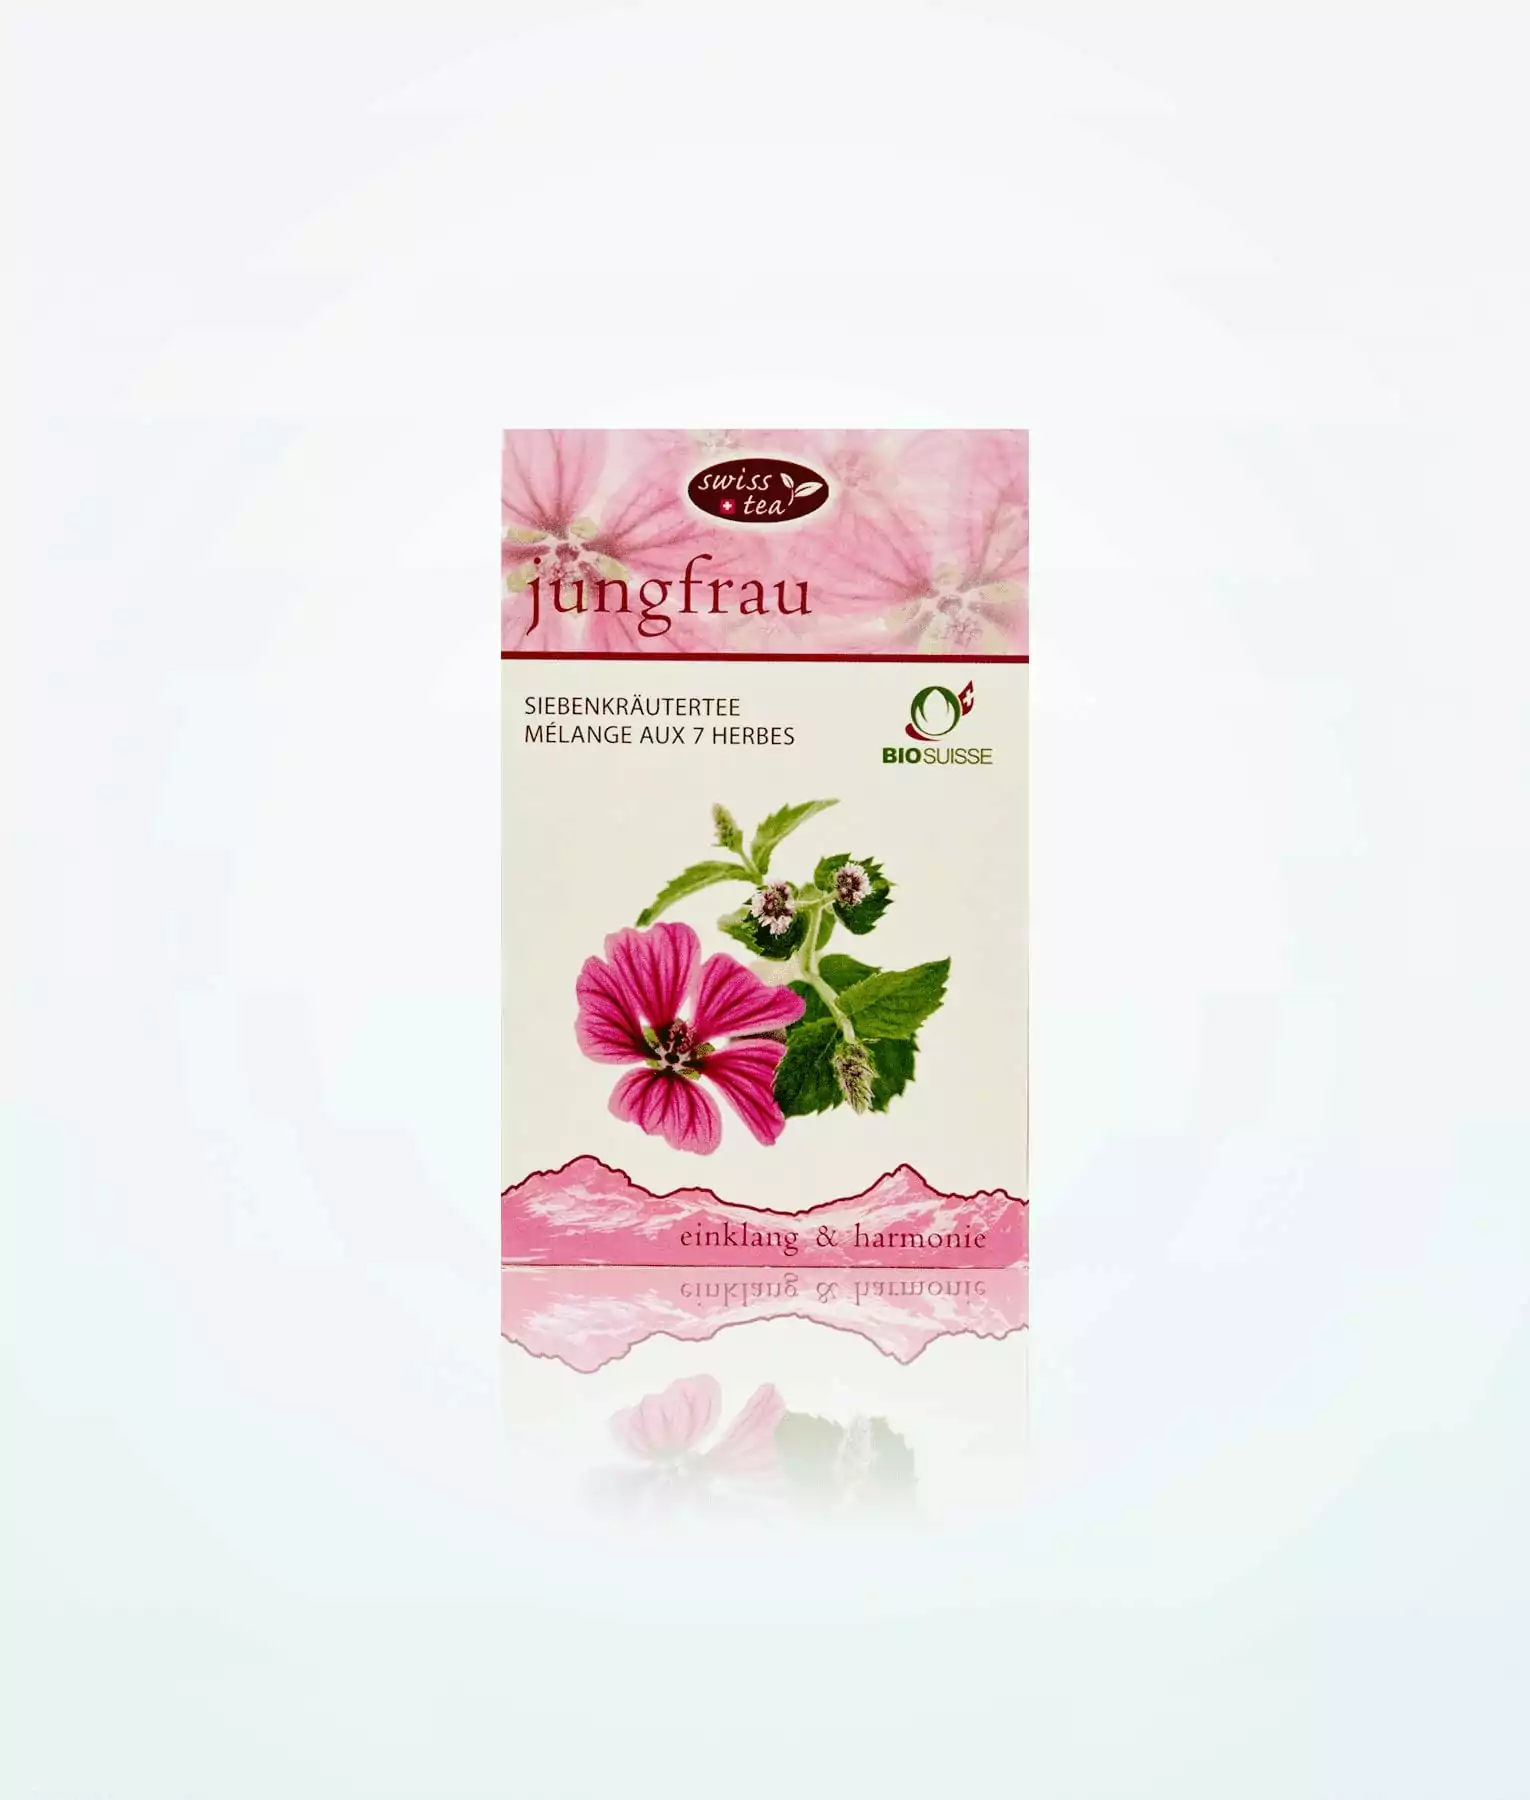 Swisstea Organic Jungfrau Tea